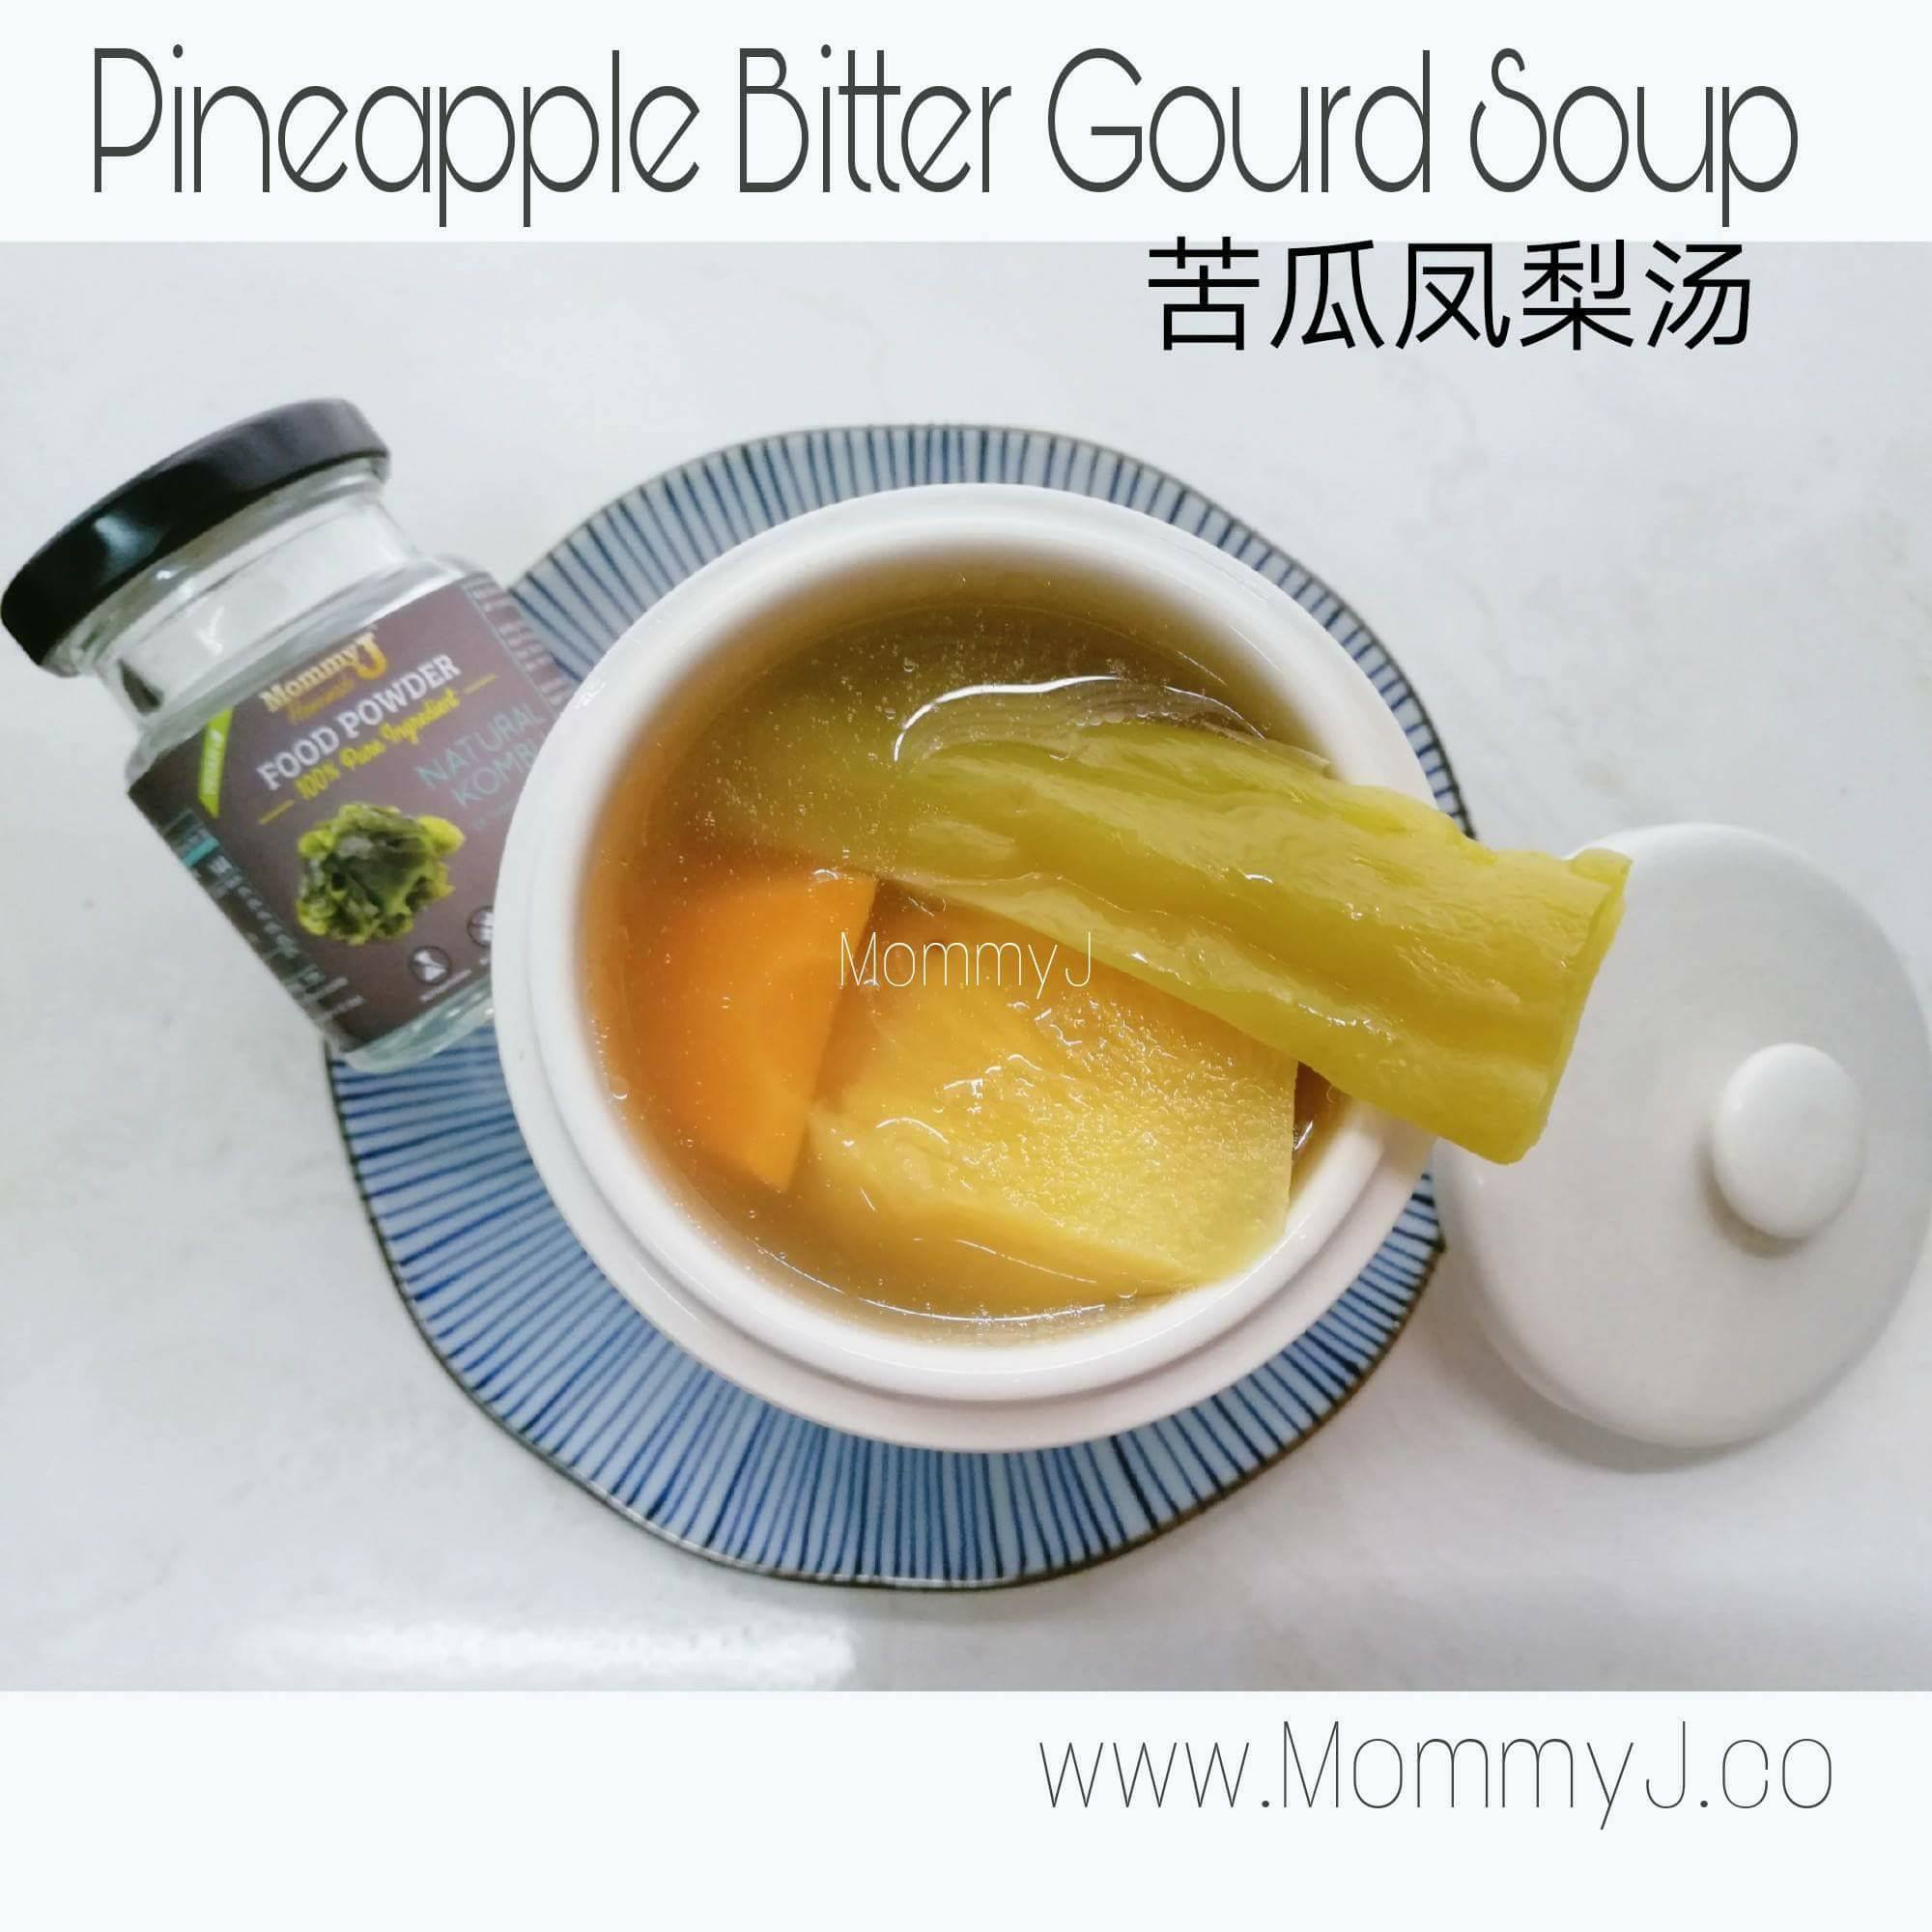 Pineapple Bitter Gourd Soup